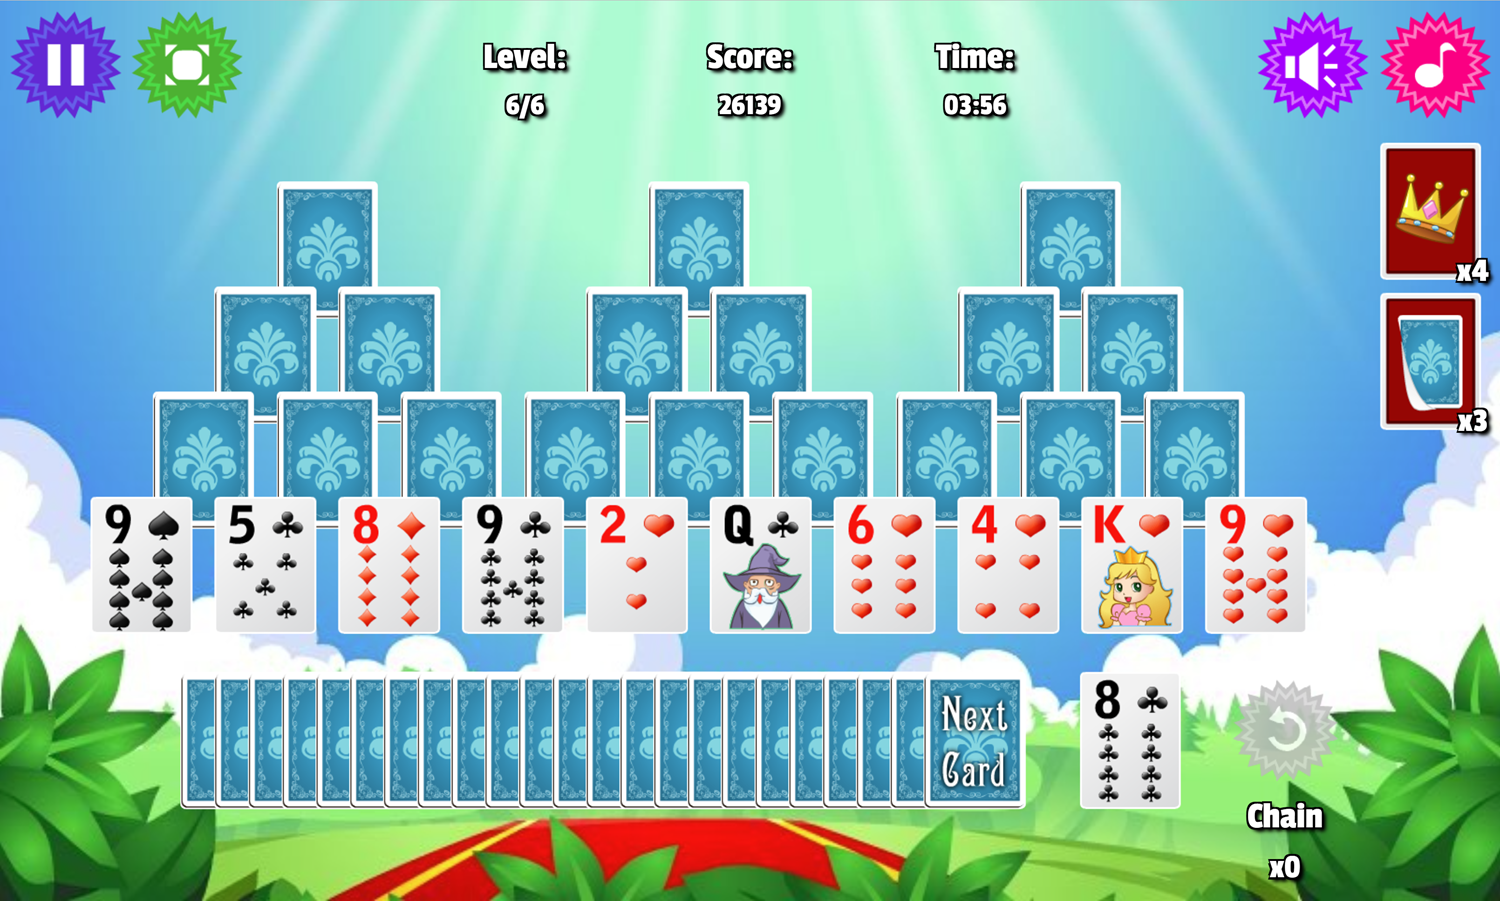 Magic Castle Solitaire Game Final Level Screenshot.